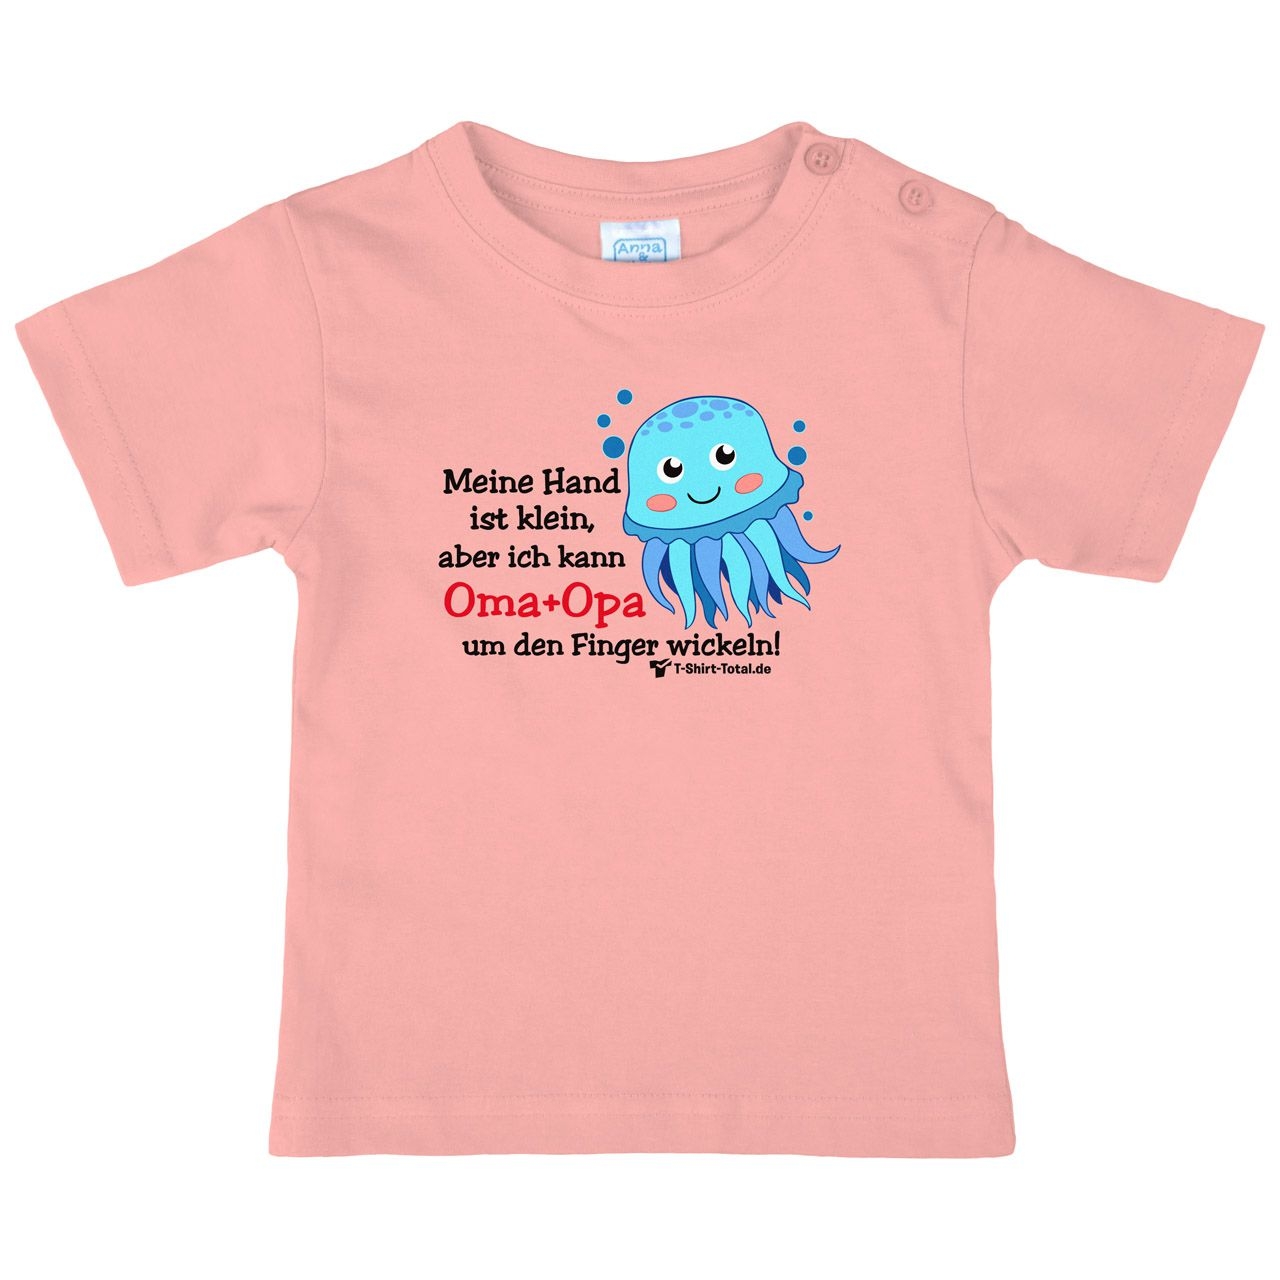 Kleine Hand Oma Opa Octopus Kinder T-Shirt rosa 68 / 74